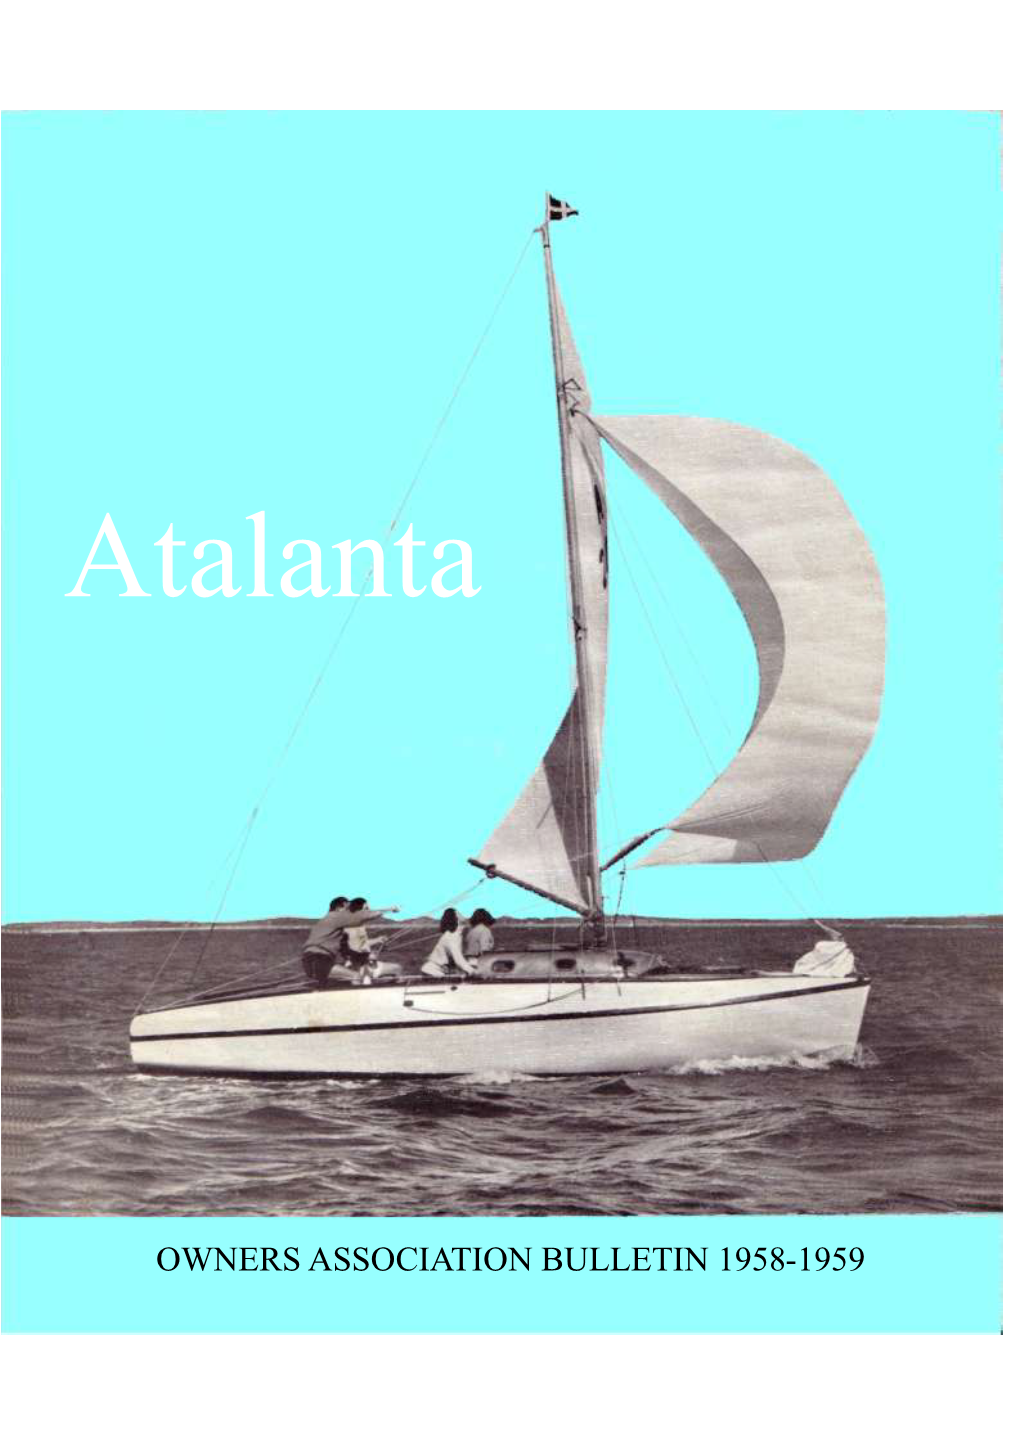 Owners Association Bulletin 1958-1959 Atalanta Owners Association A41 R